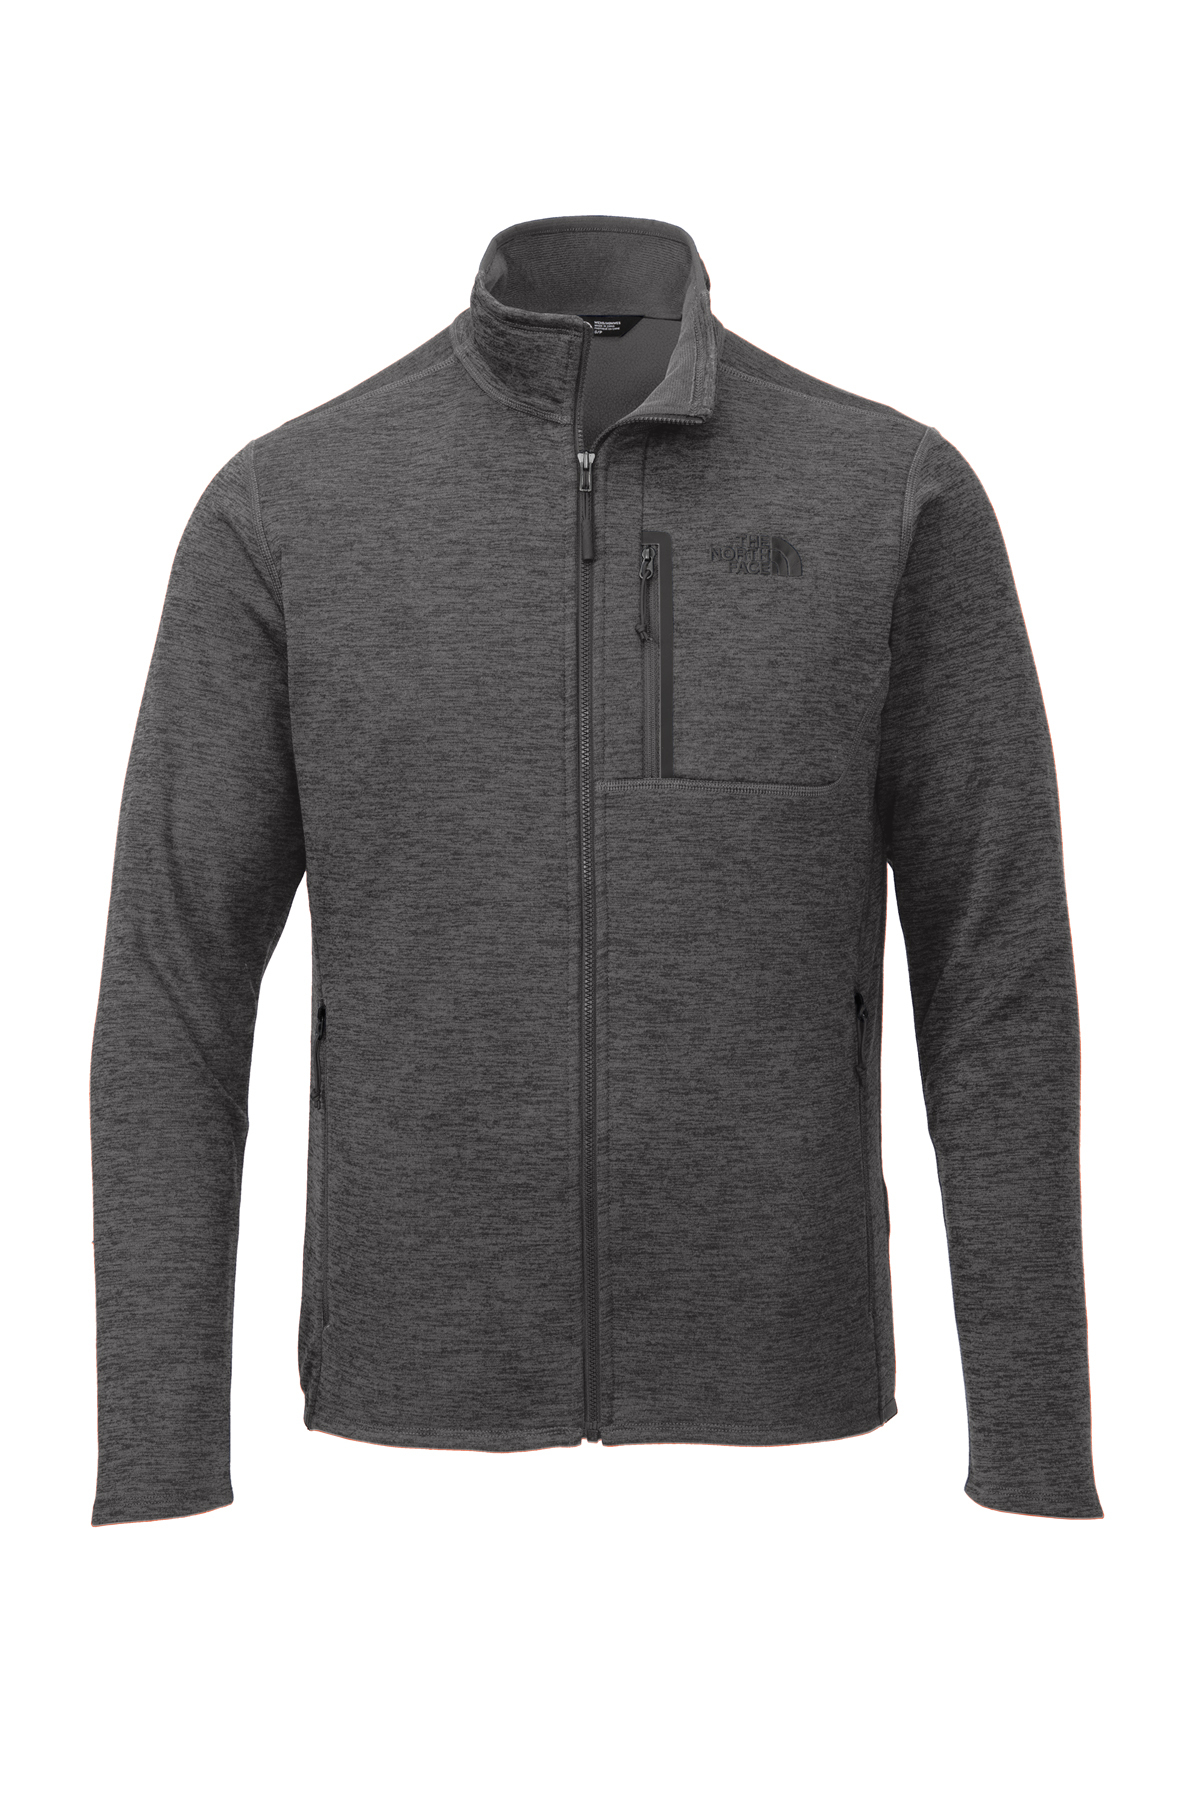 The North Face Skyline Full-Zip Fleece Jacket | Product | SanMar